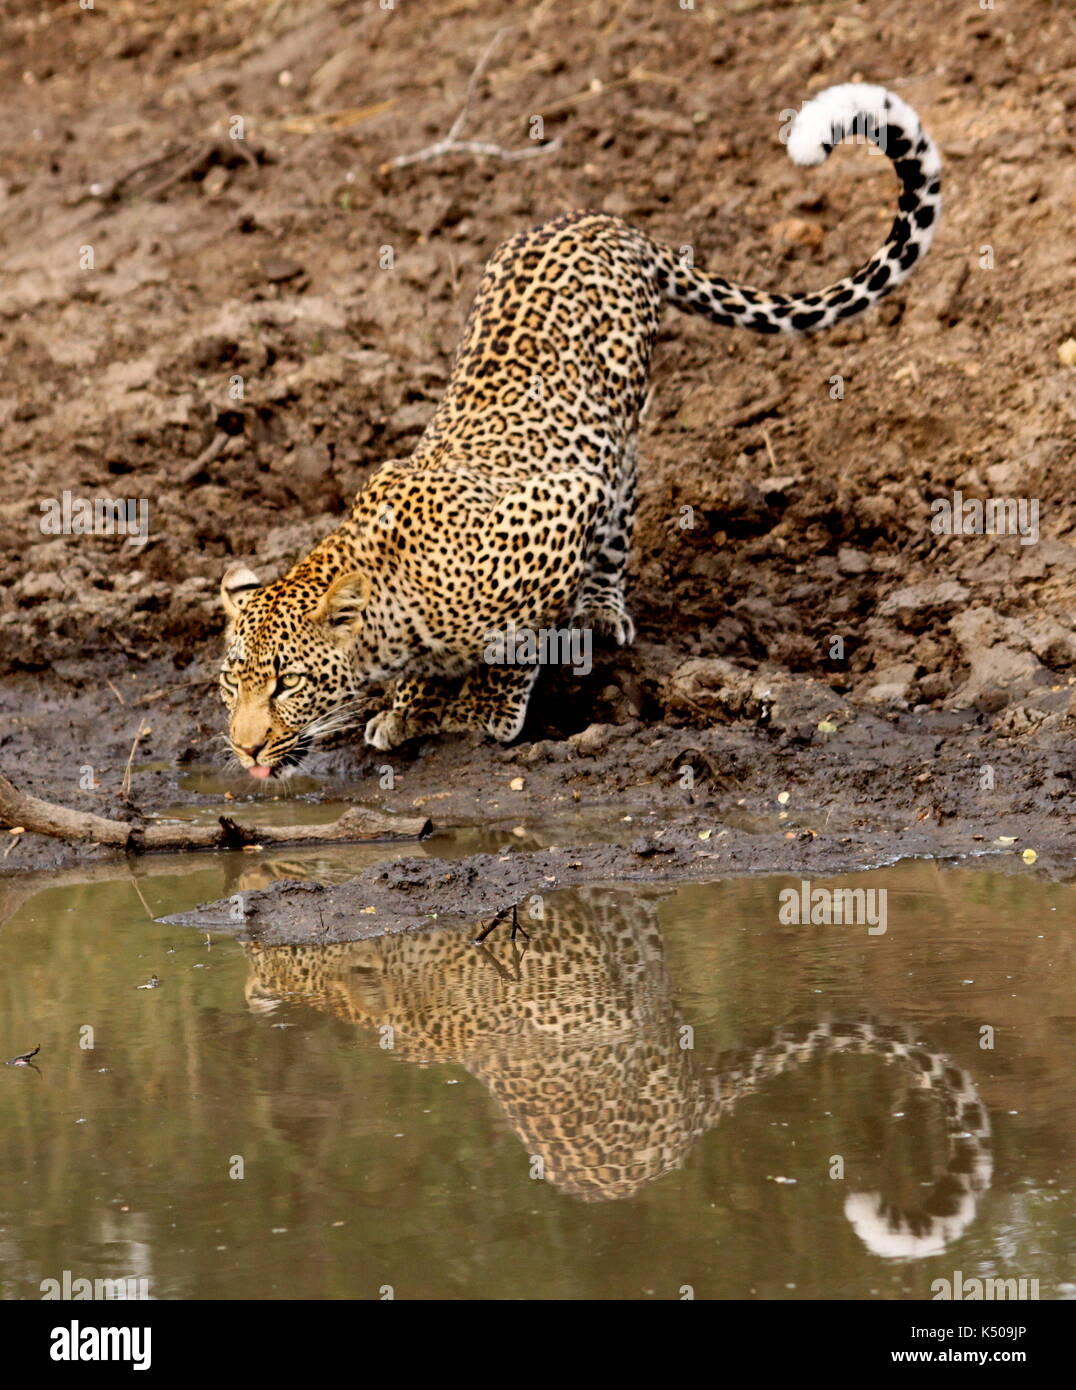 Leopard bebiendo de un abrevadero, londolozi, Sudáfrica Foto de stock